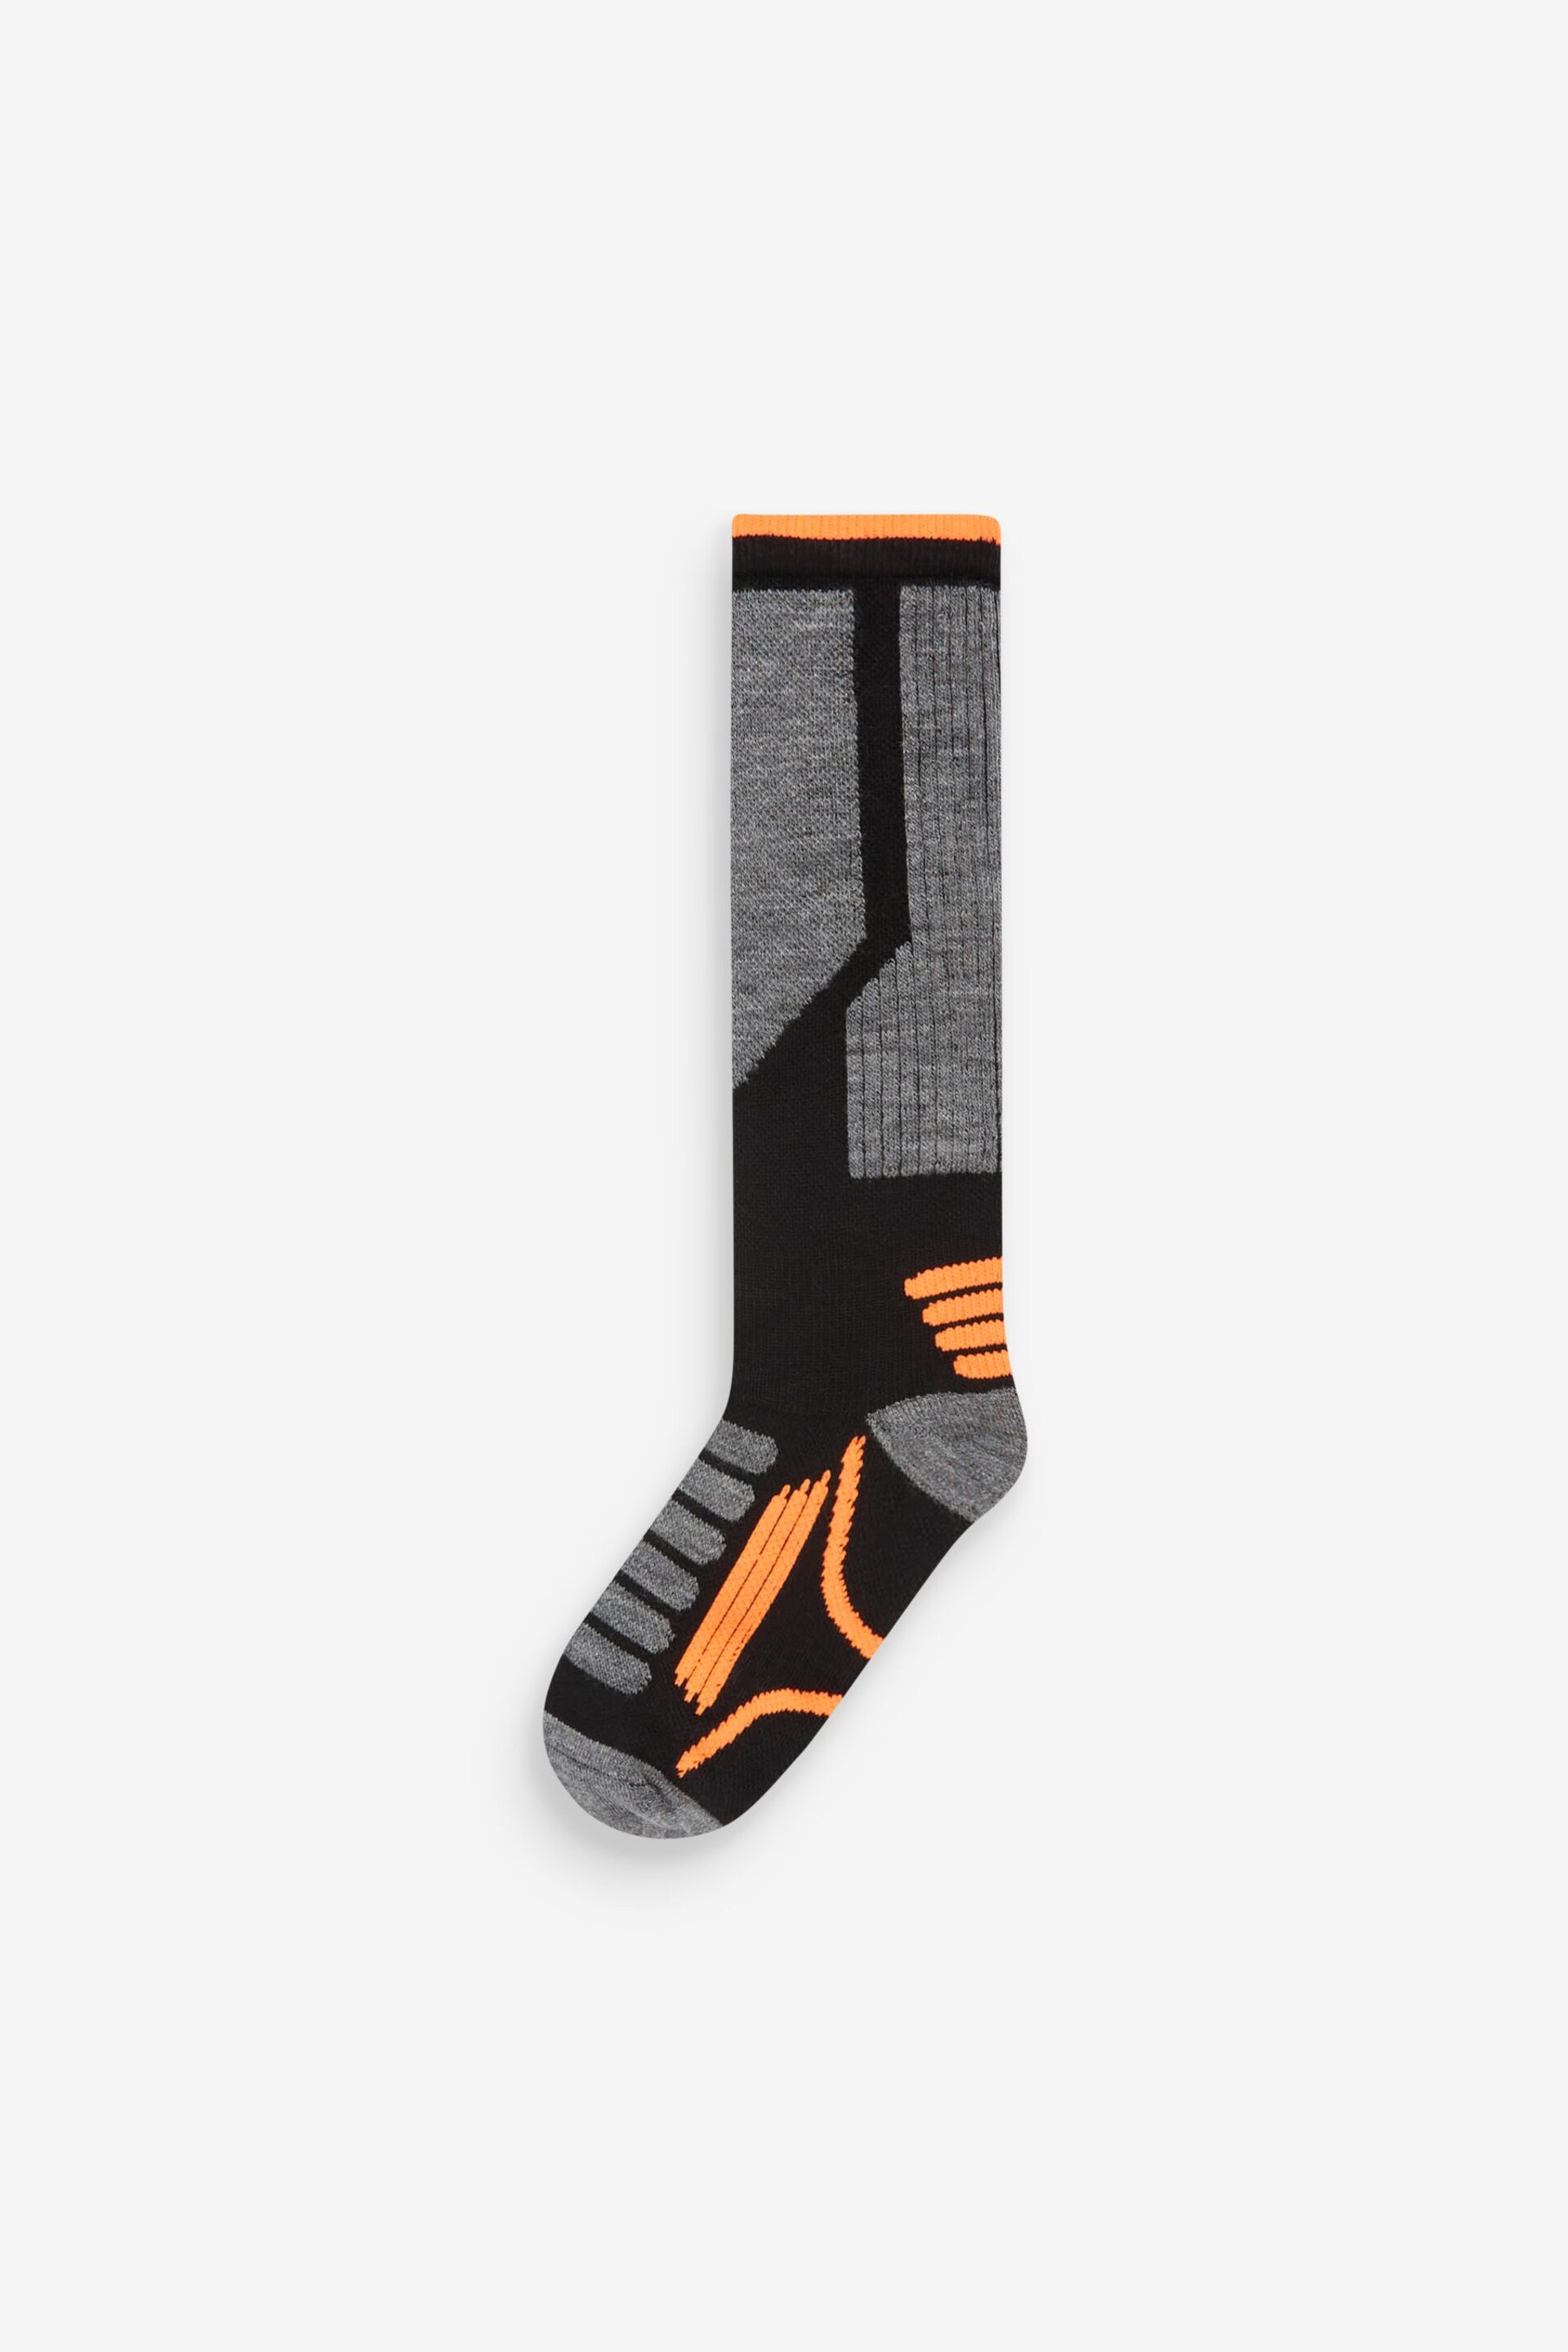 Black Ski Socks 2 Pack - Image 3 of 3